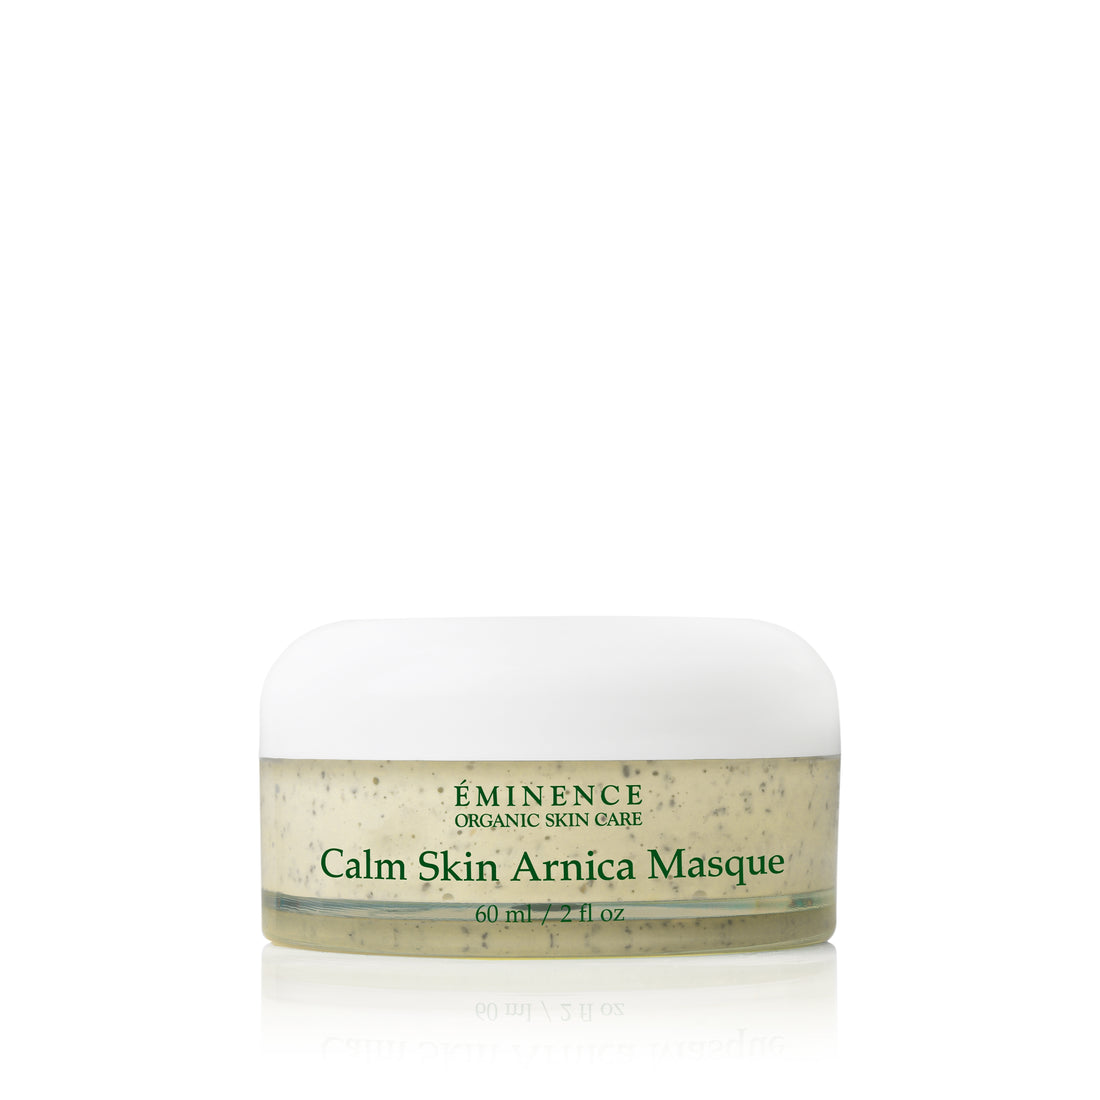 Calm Skin Arnica Masque | For sensitive prone skin types